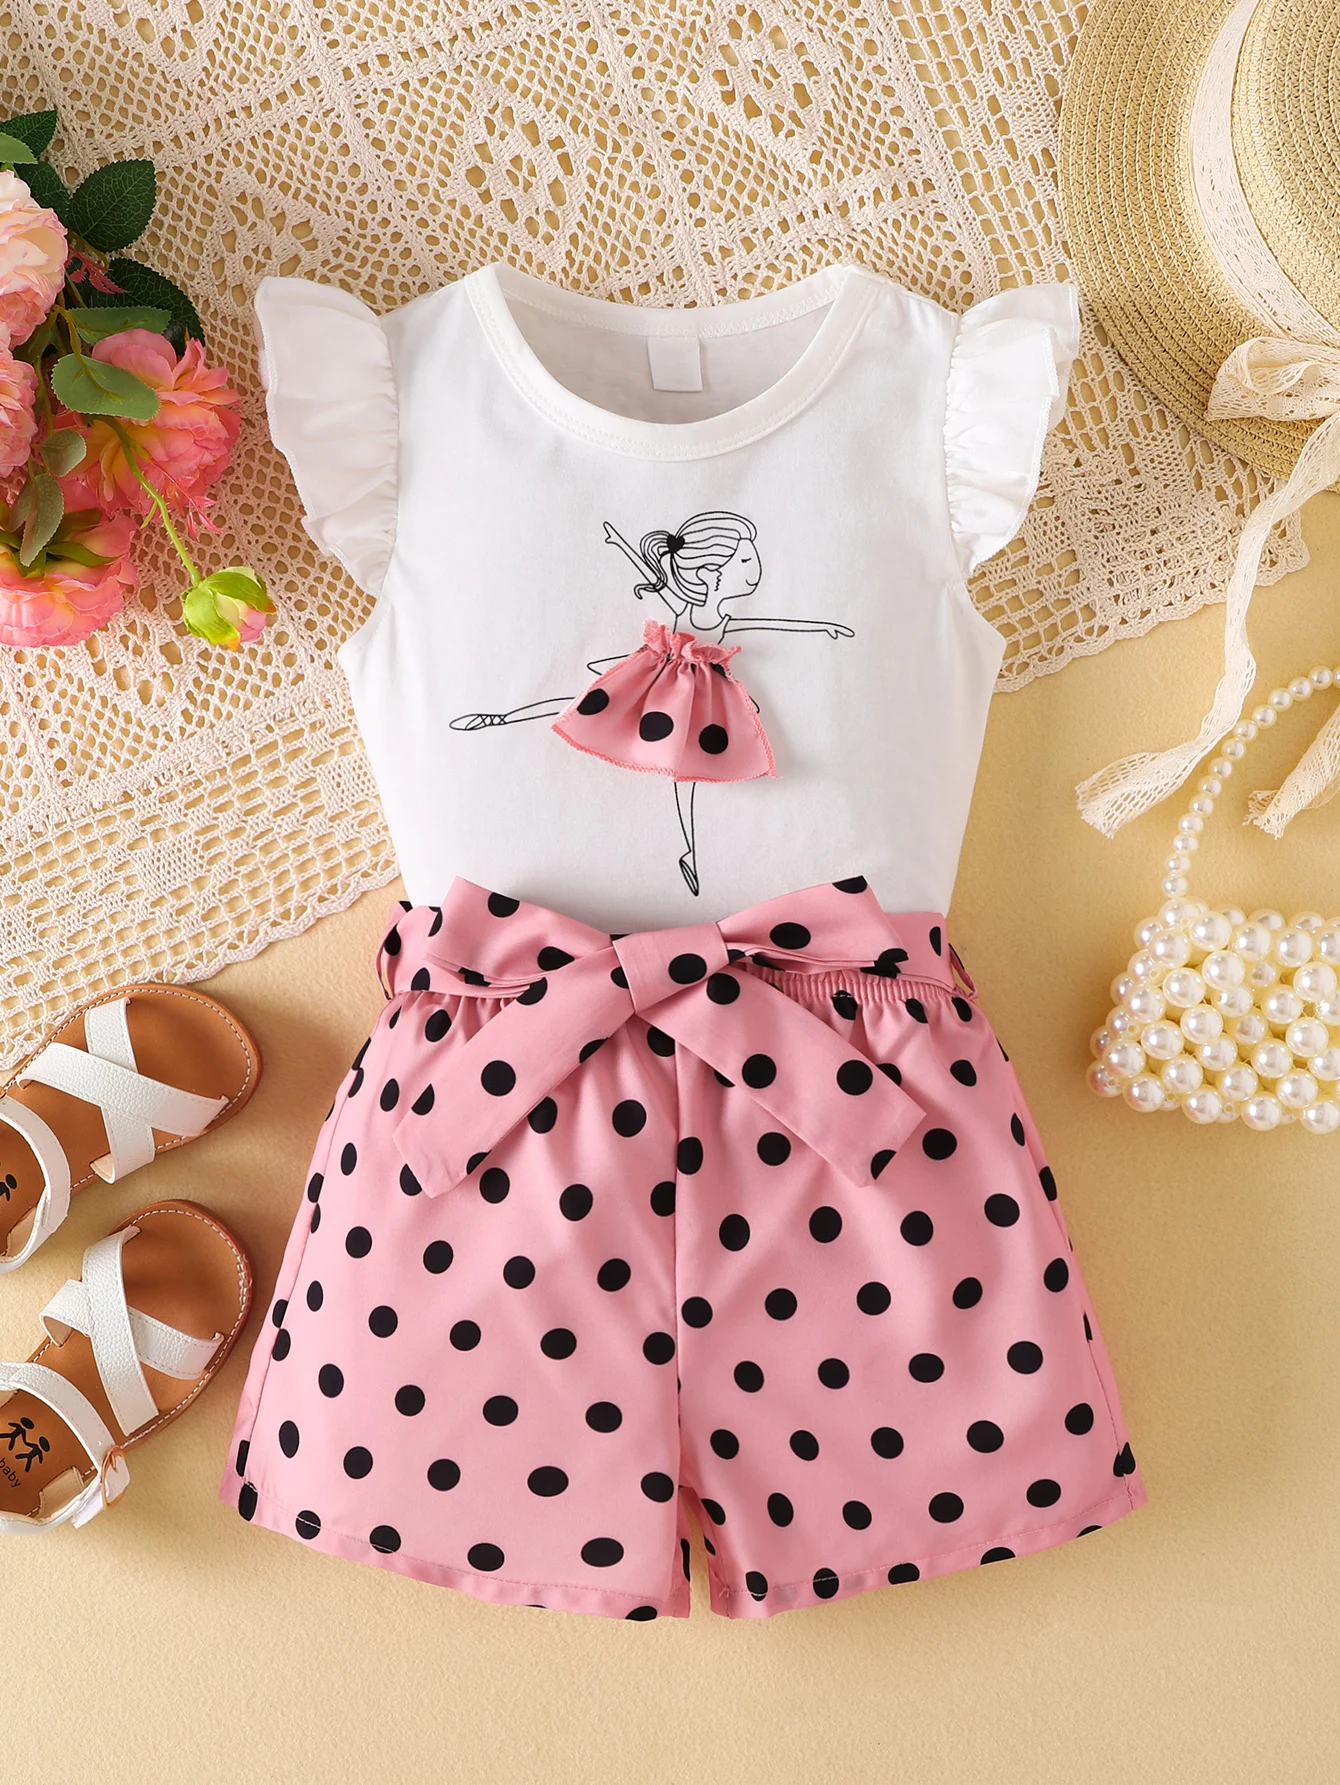 4-7 Year Old Girls' Clothing Round Neck Sleeveless Printed T-shirt Polka Dot Shorts Two-piece Set